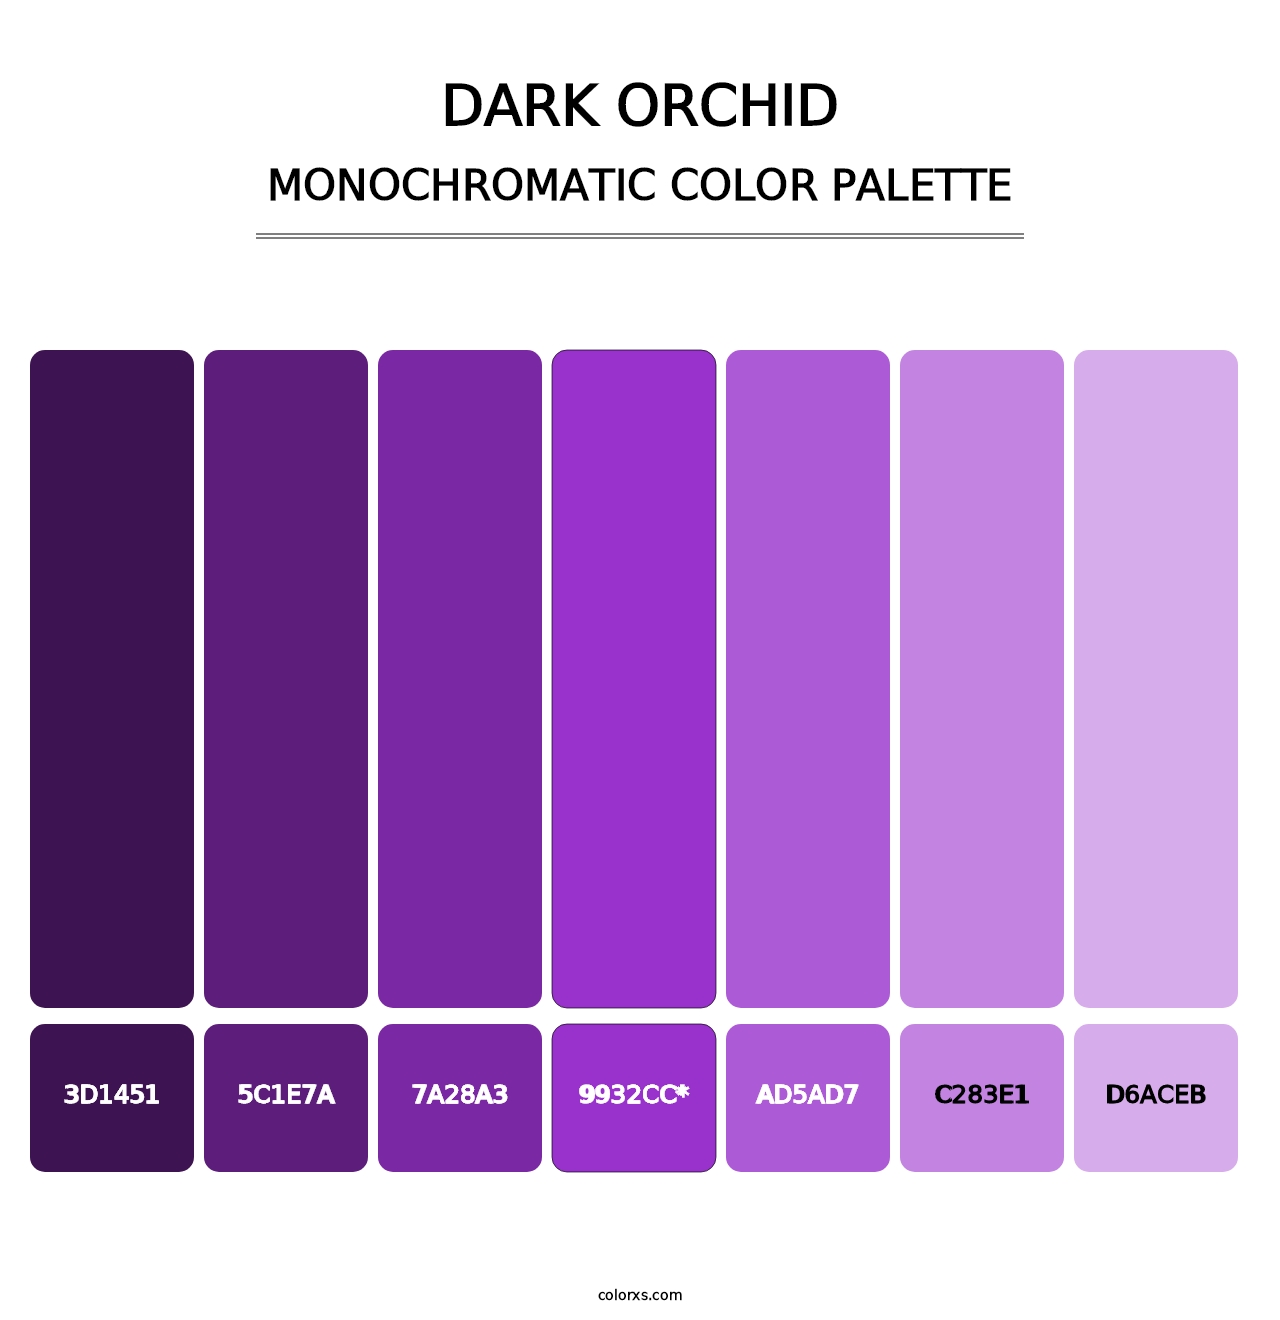 Dark Orchid - Monochromatic Color Palette